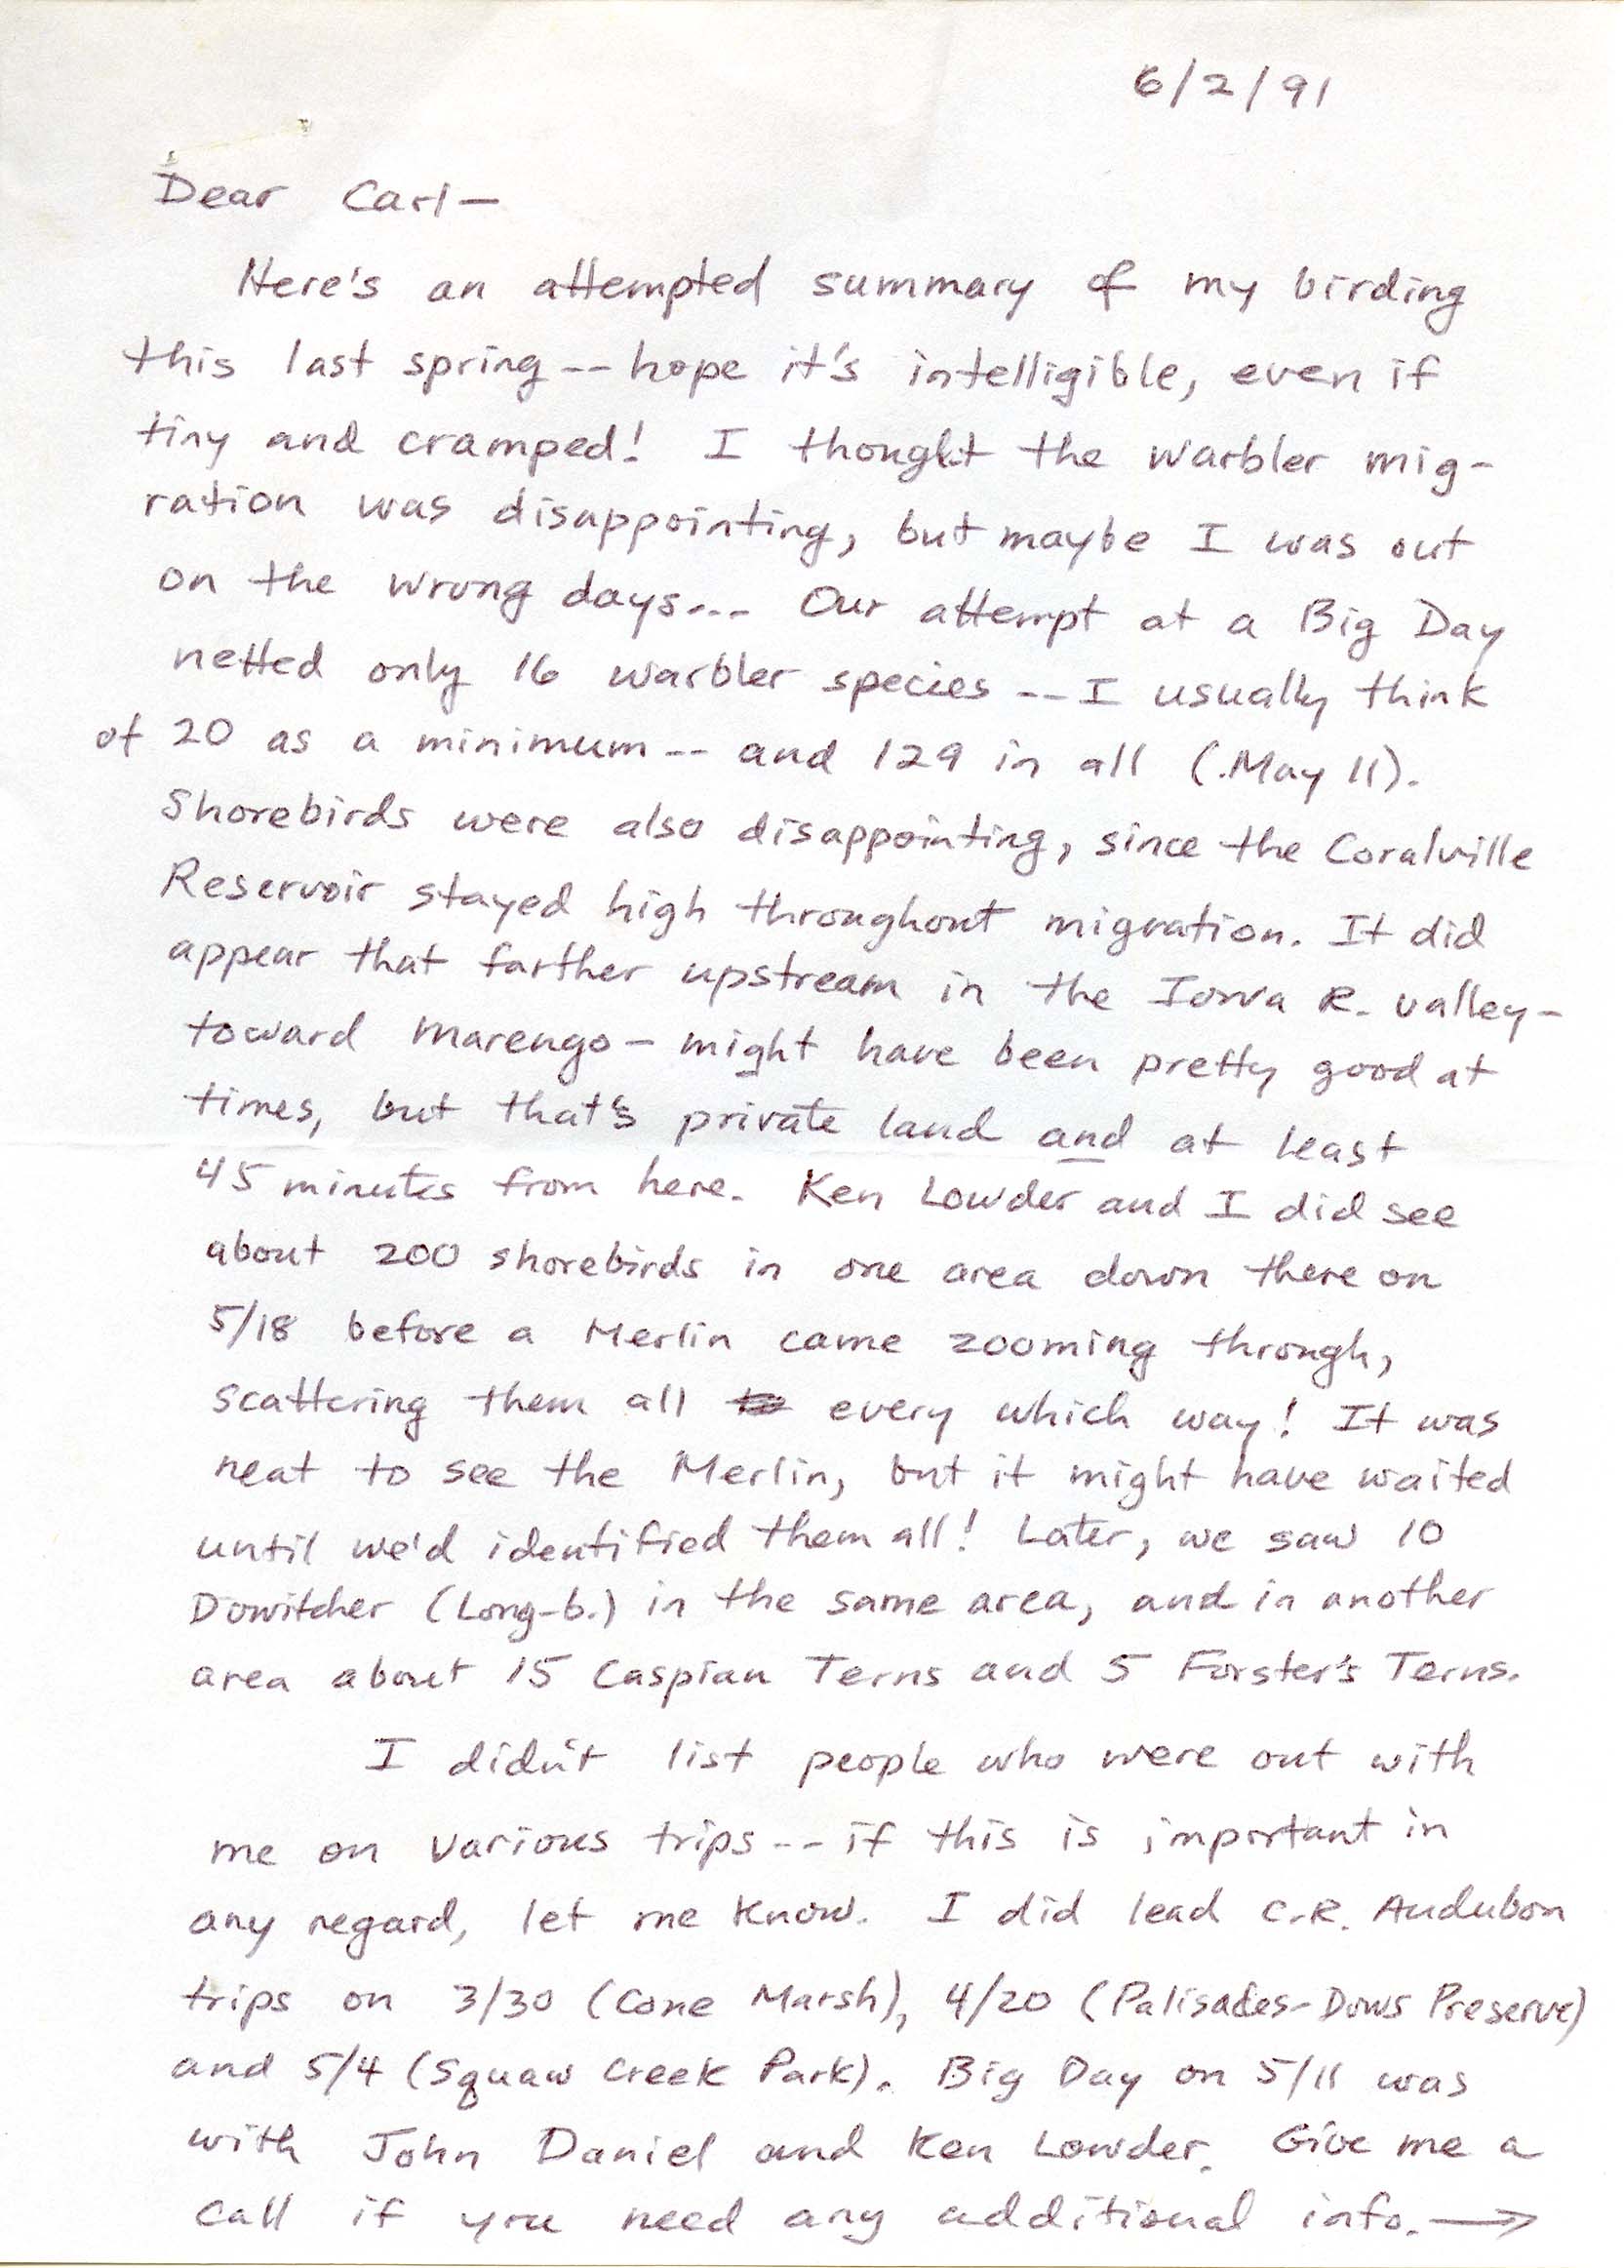 Peter Wickham letter to Carl Bendorf, June 2 1991